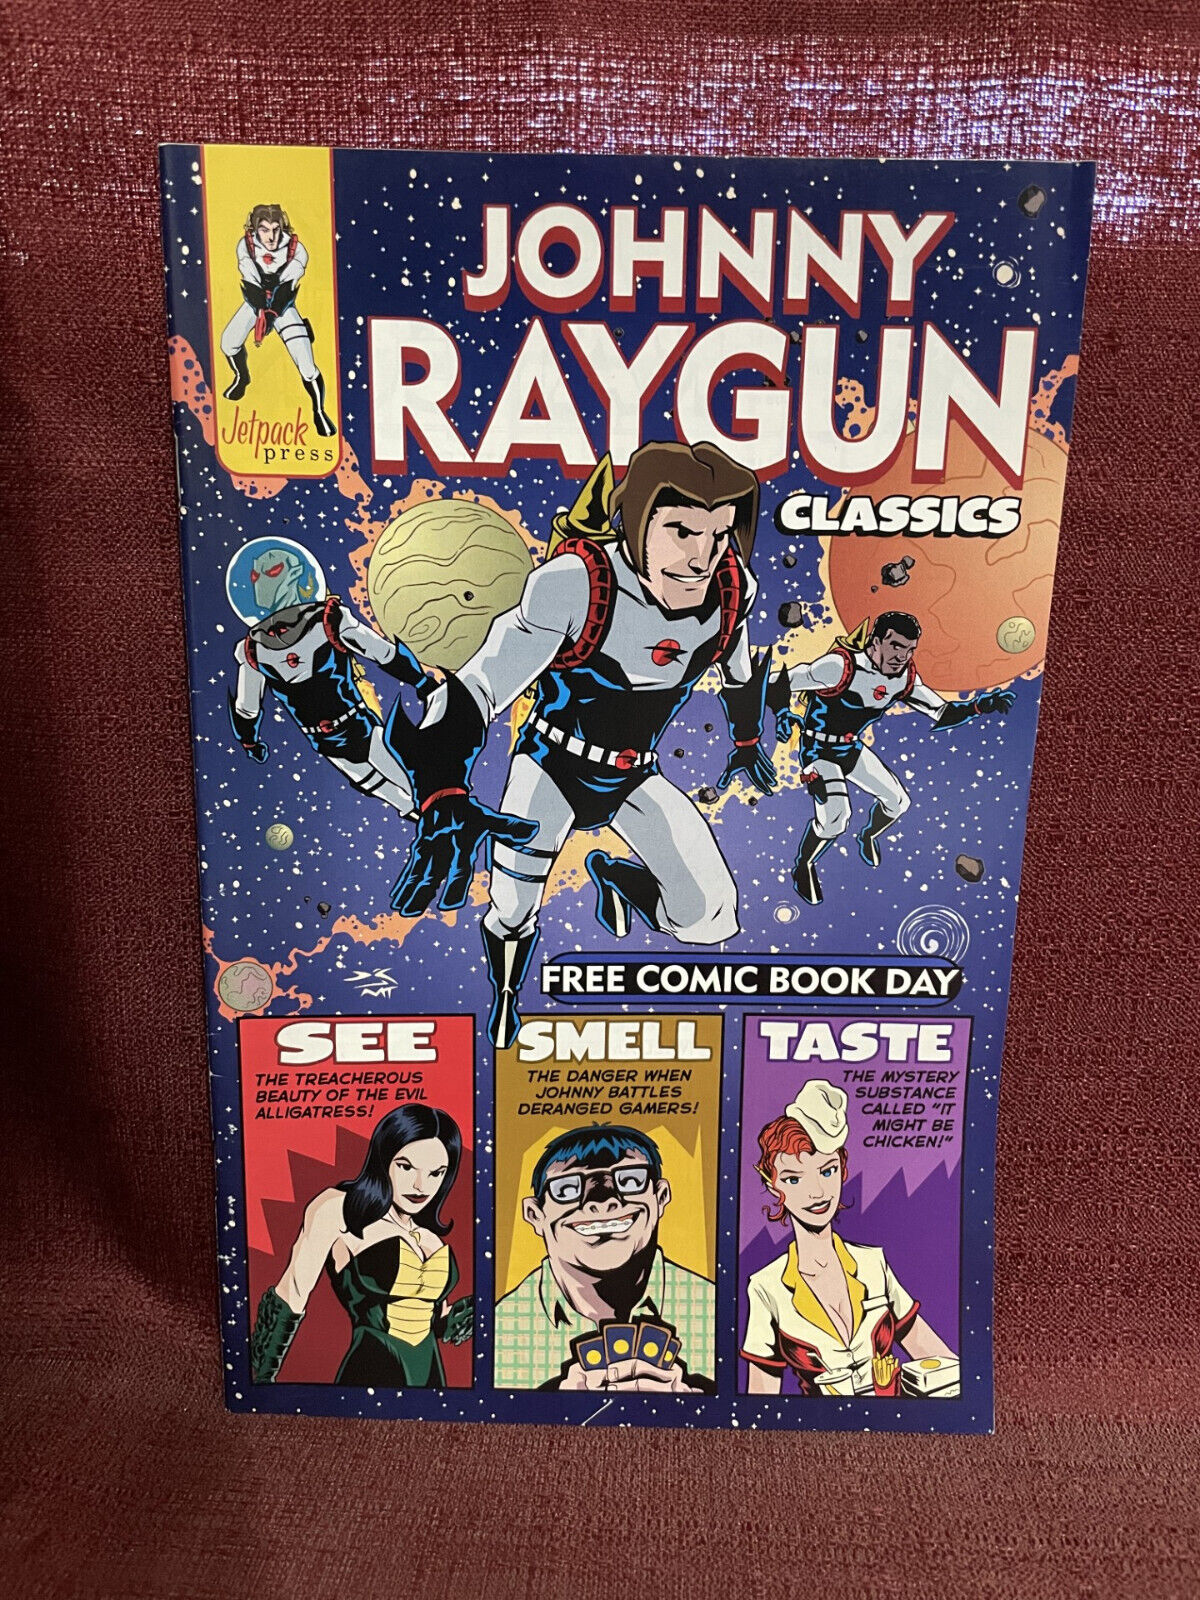 Johnny Raygun Classics #1 Free Comic Book Day 2004 Jetpack Press FCBD